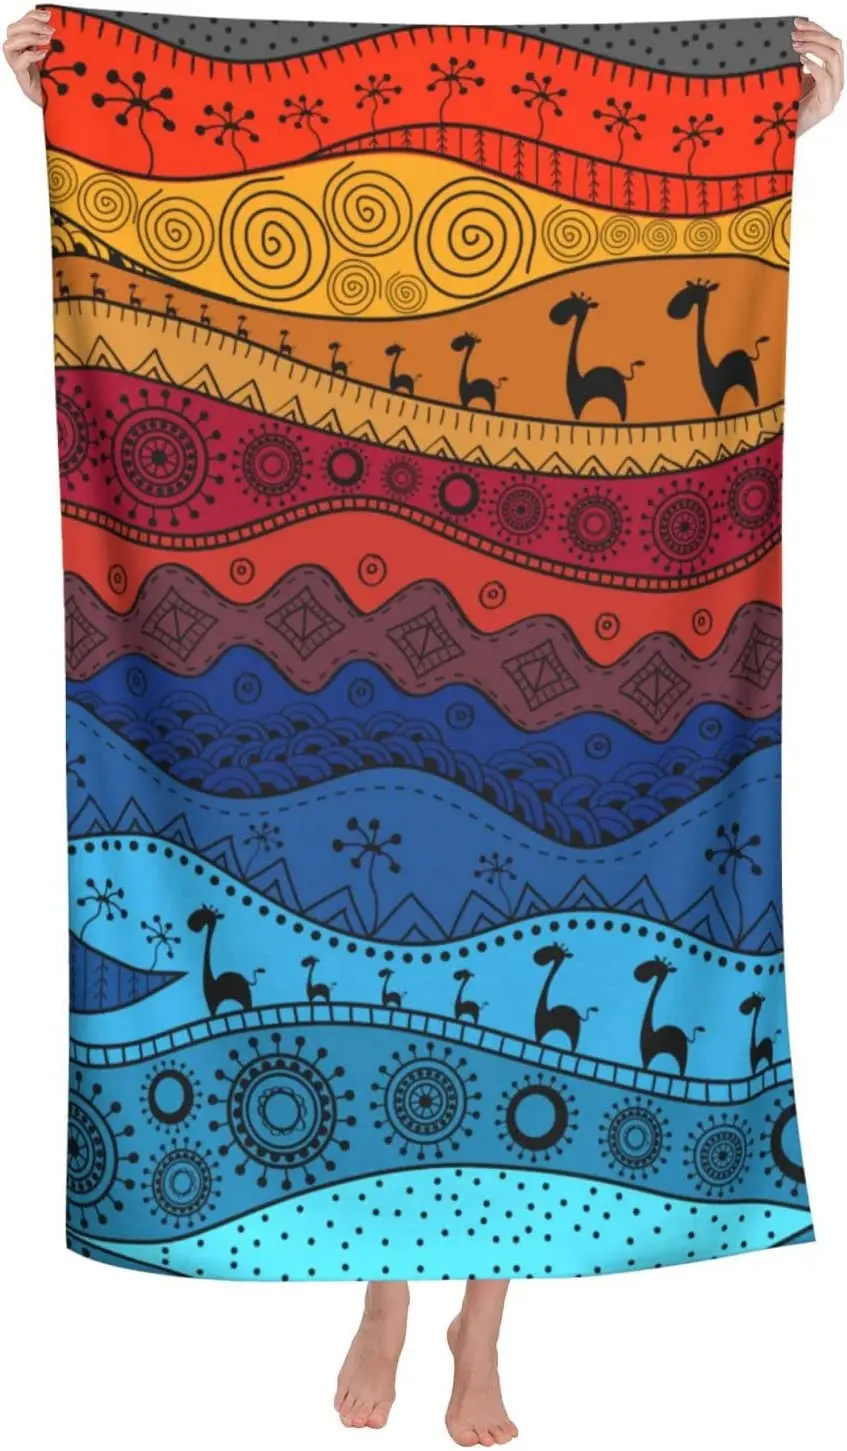 

Microfiber Ethnic Tribal Beach Towel Geometric Giraffe Animal Soft Bath Pool Towels Sand Proof Highly Absorbent 31.5x51.2 Inches